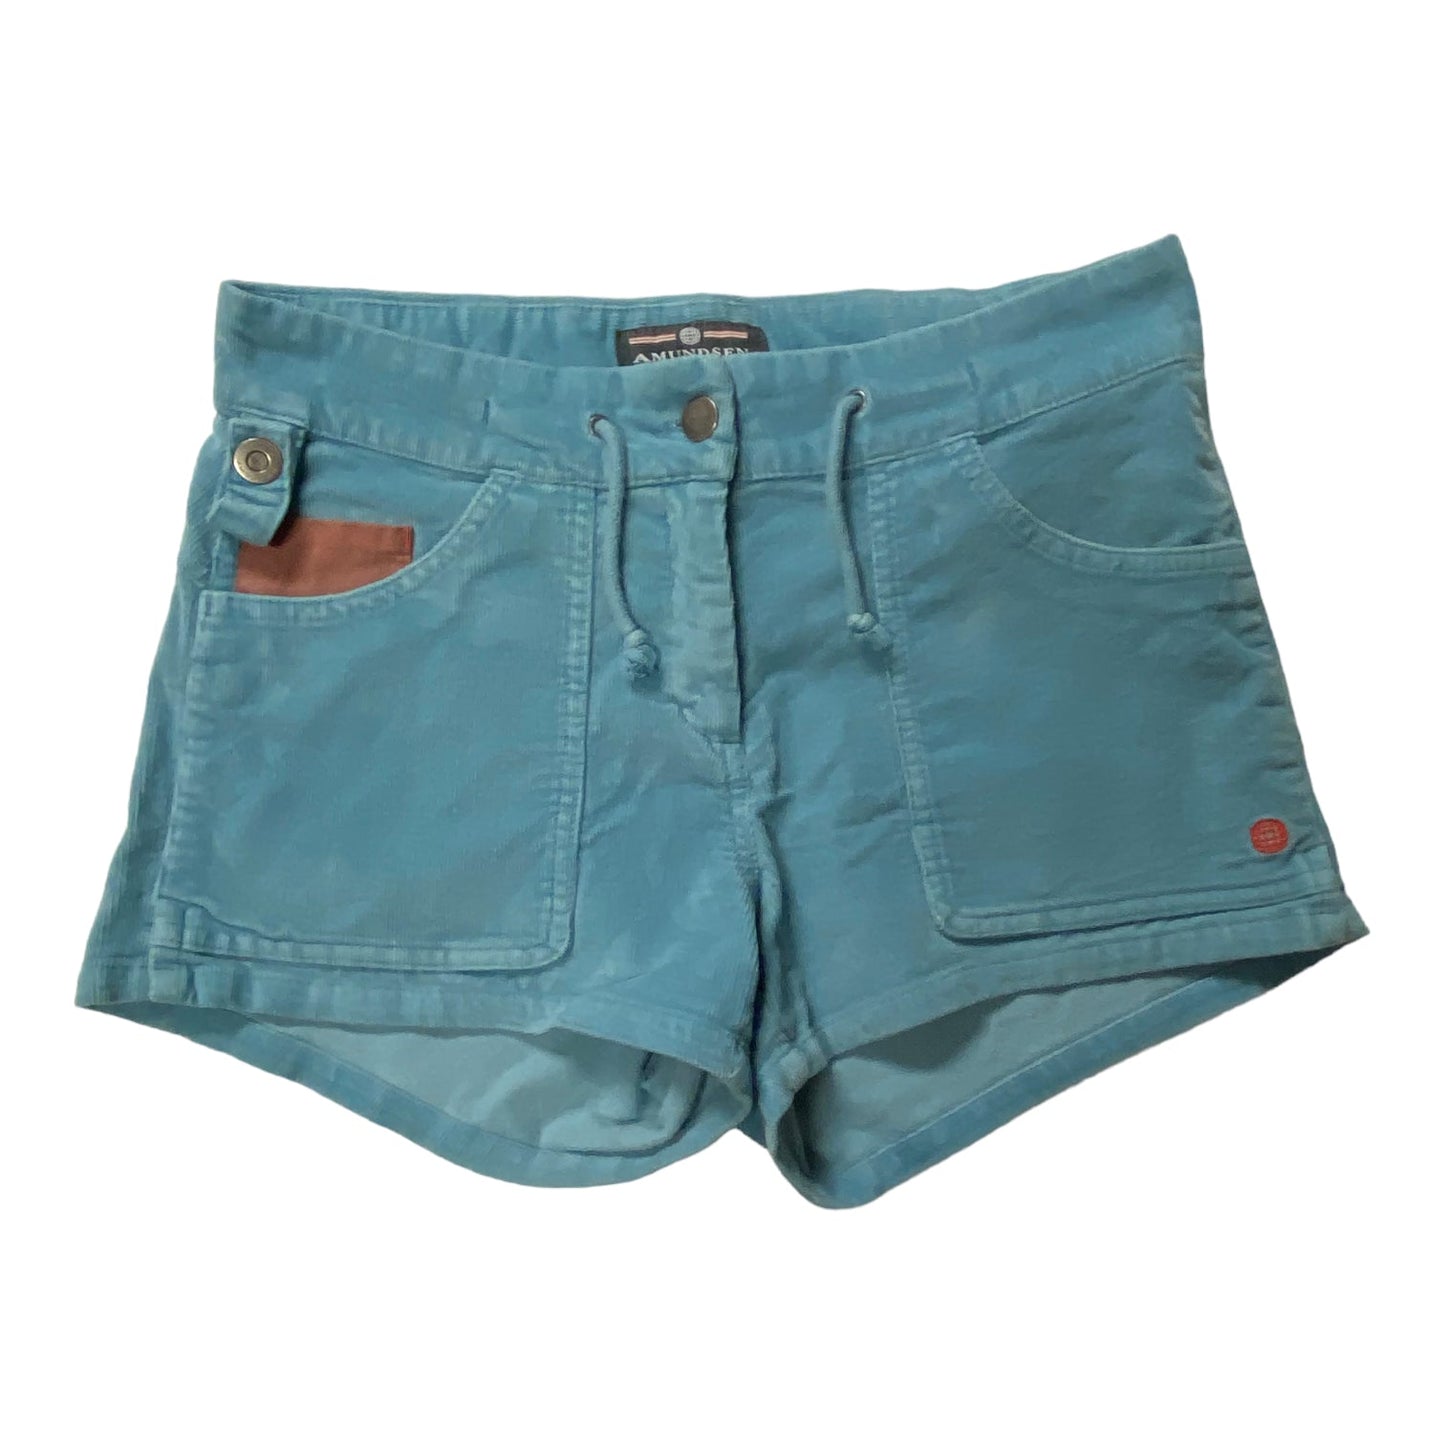 Blue Shorts AMUNDSEN - CORDUROY, Size S